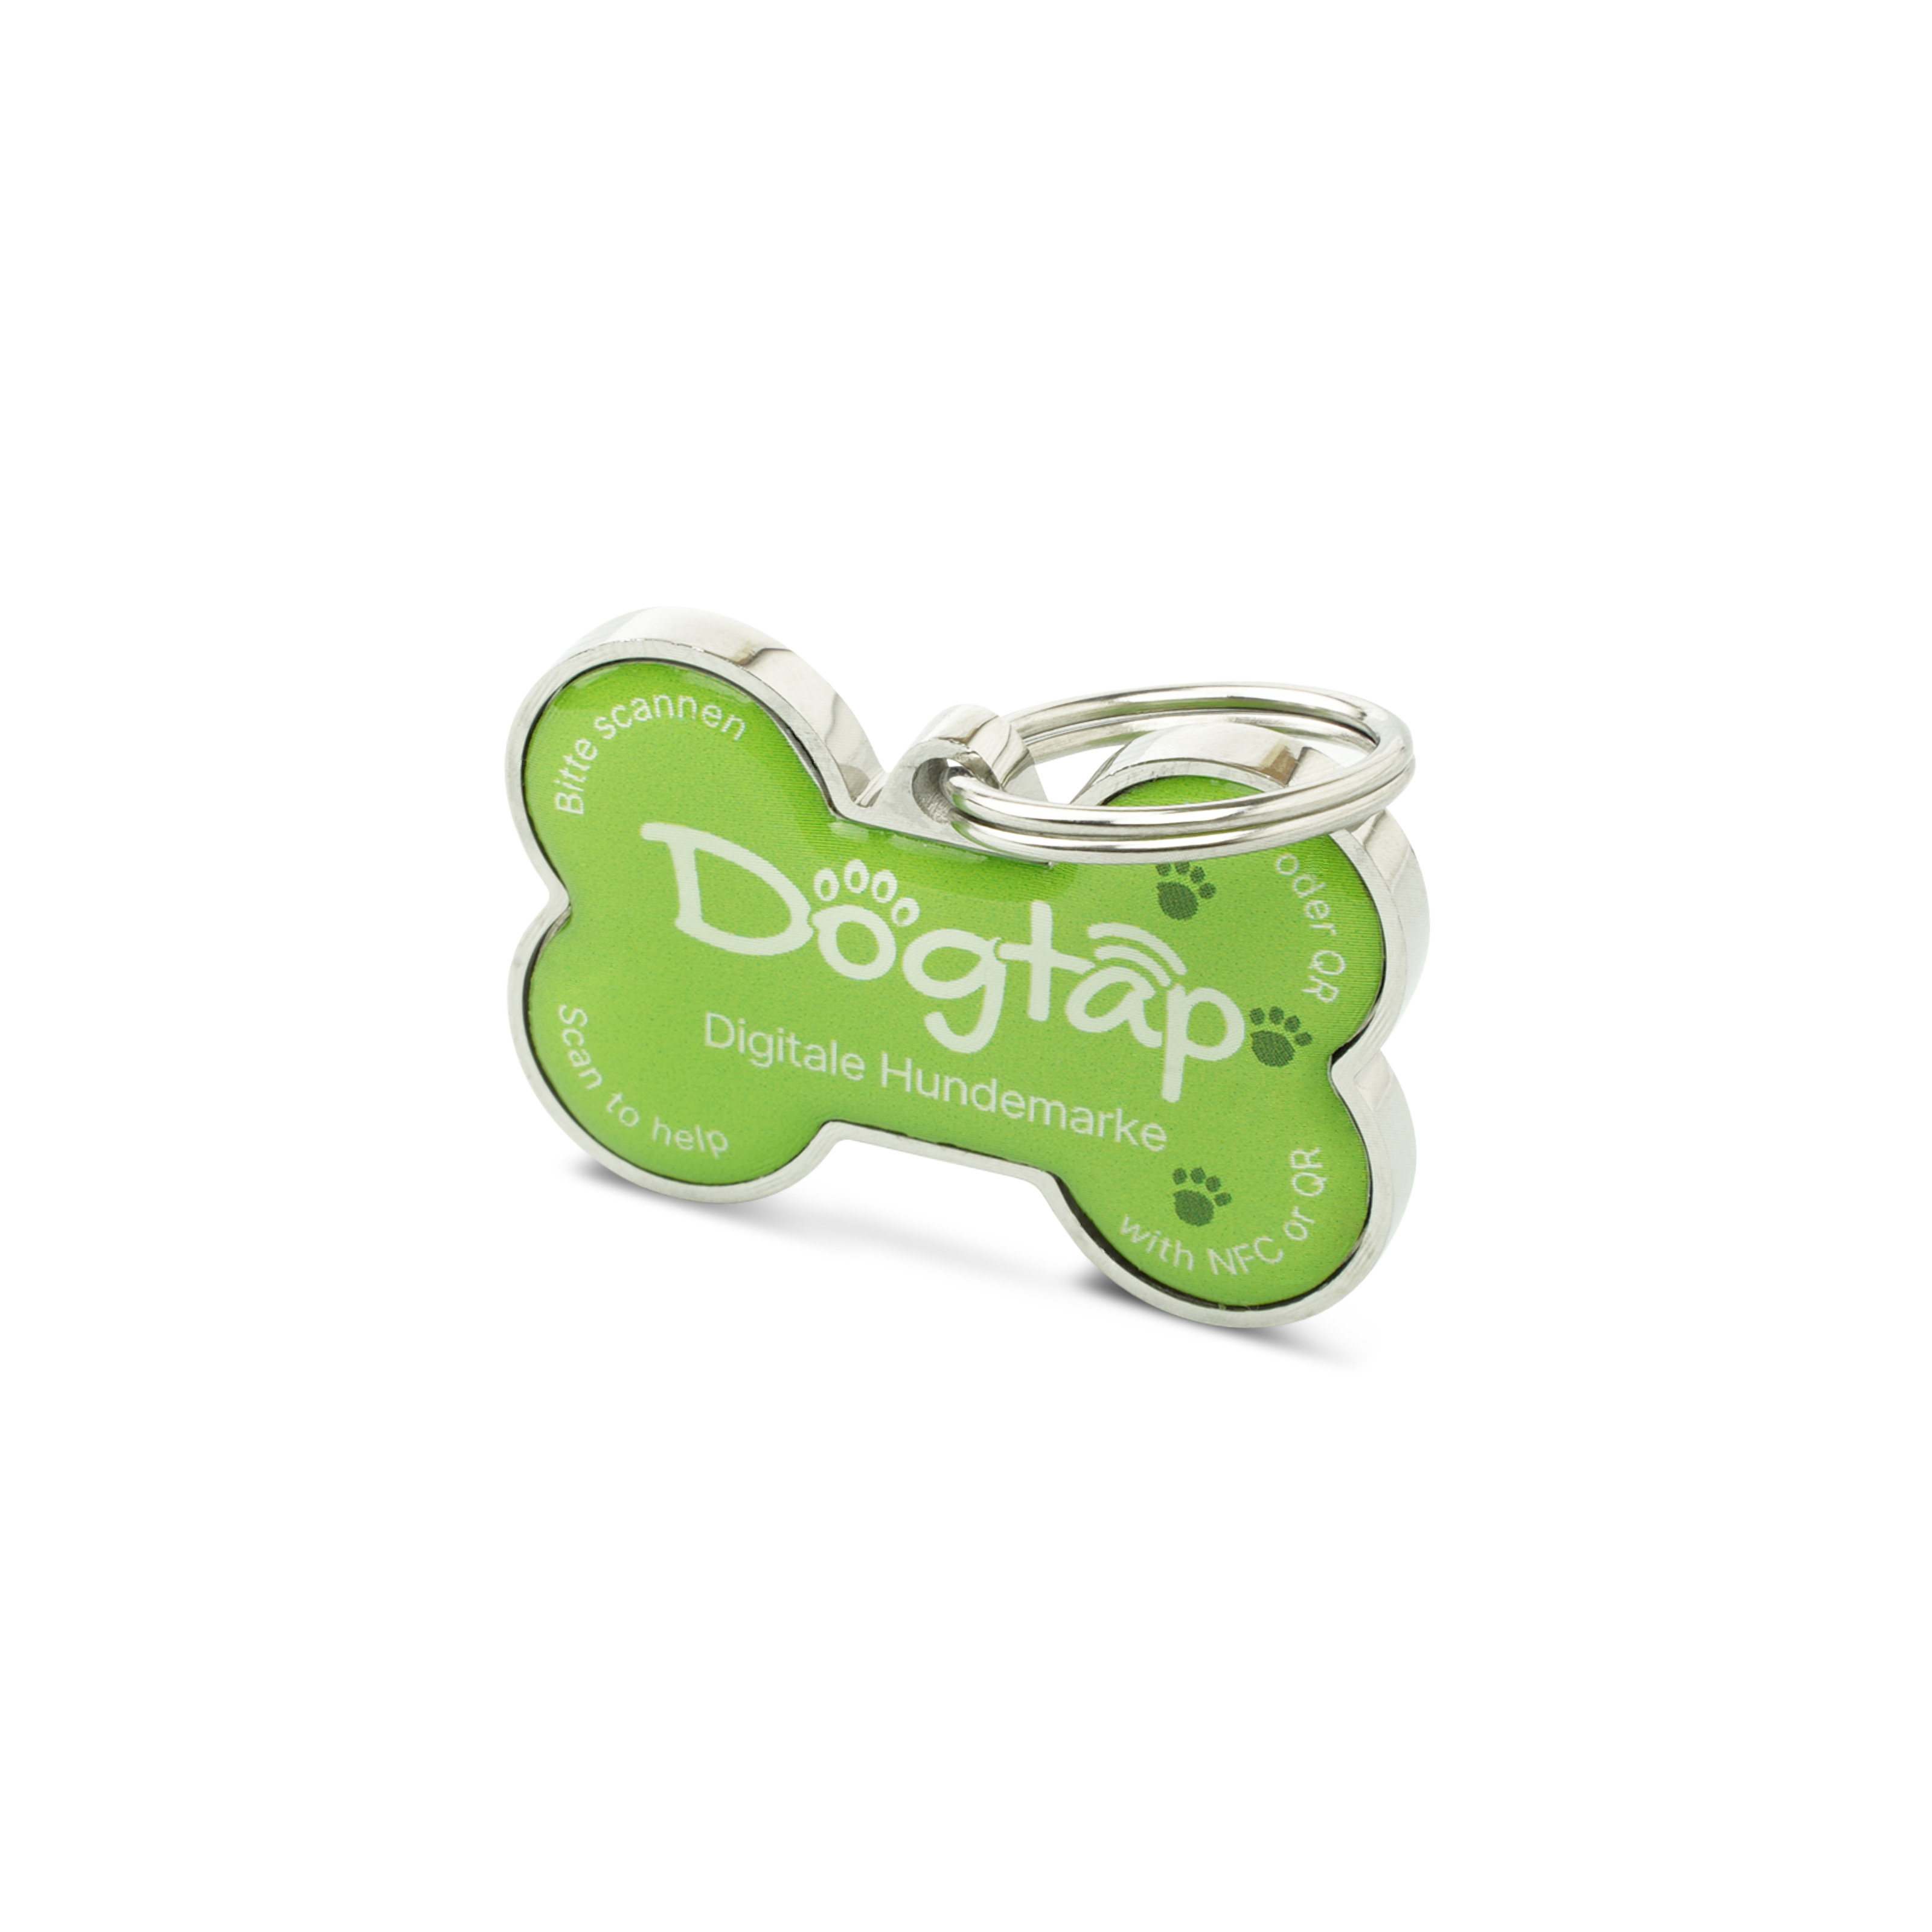 Dogtap Solid - Digitale Hundemarke - PVC / Metall - 41,6 x 28,5 x 4,6 mm - grün